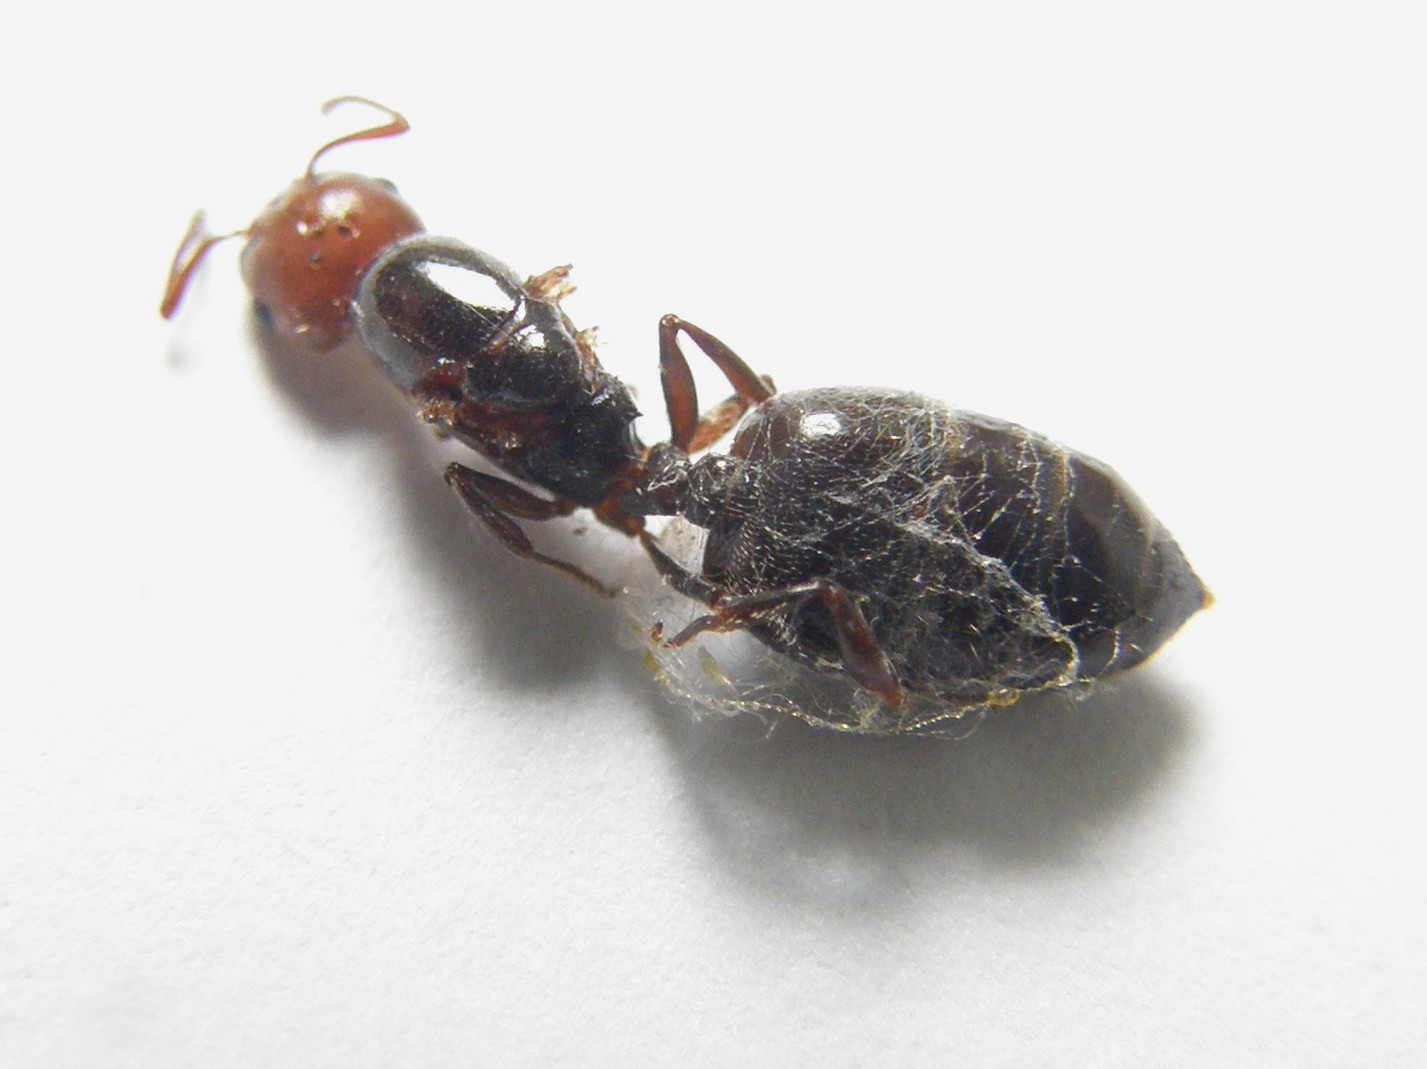 Grossa formica...finita male: Crematogaster scutellaris